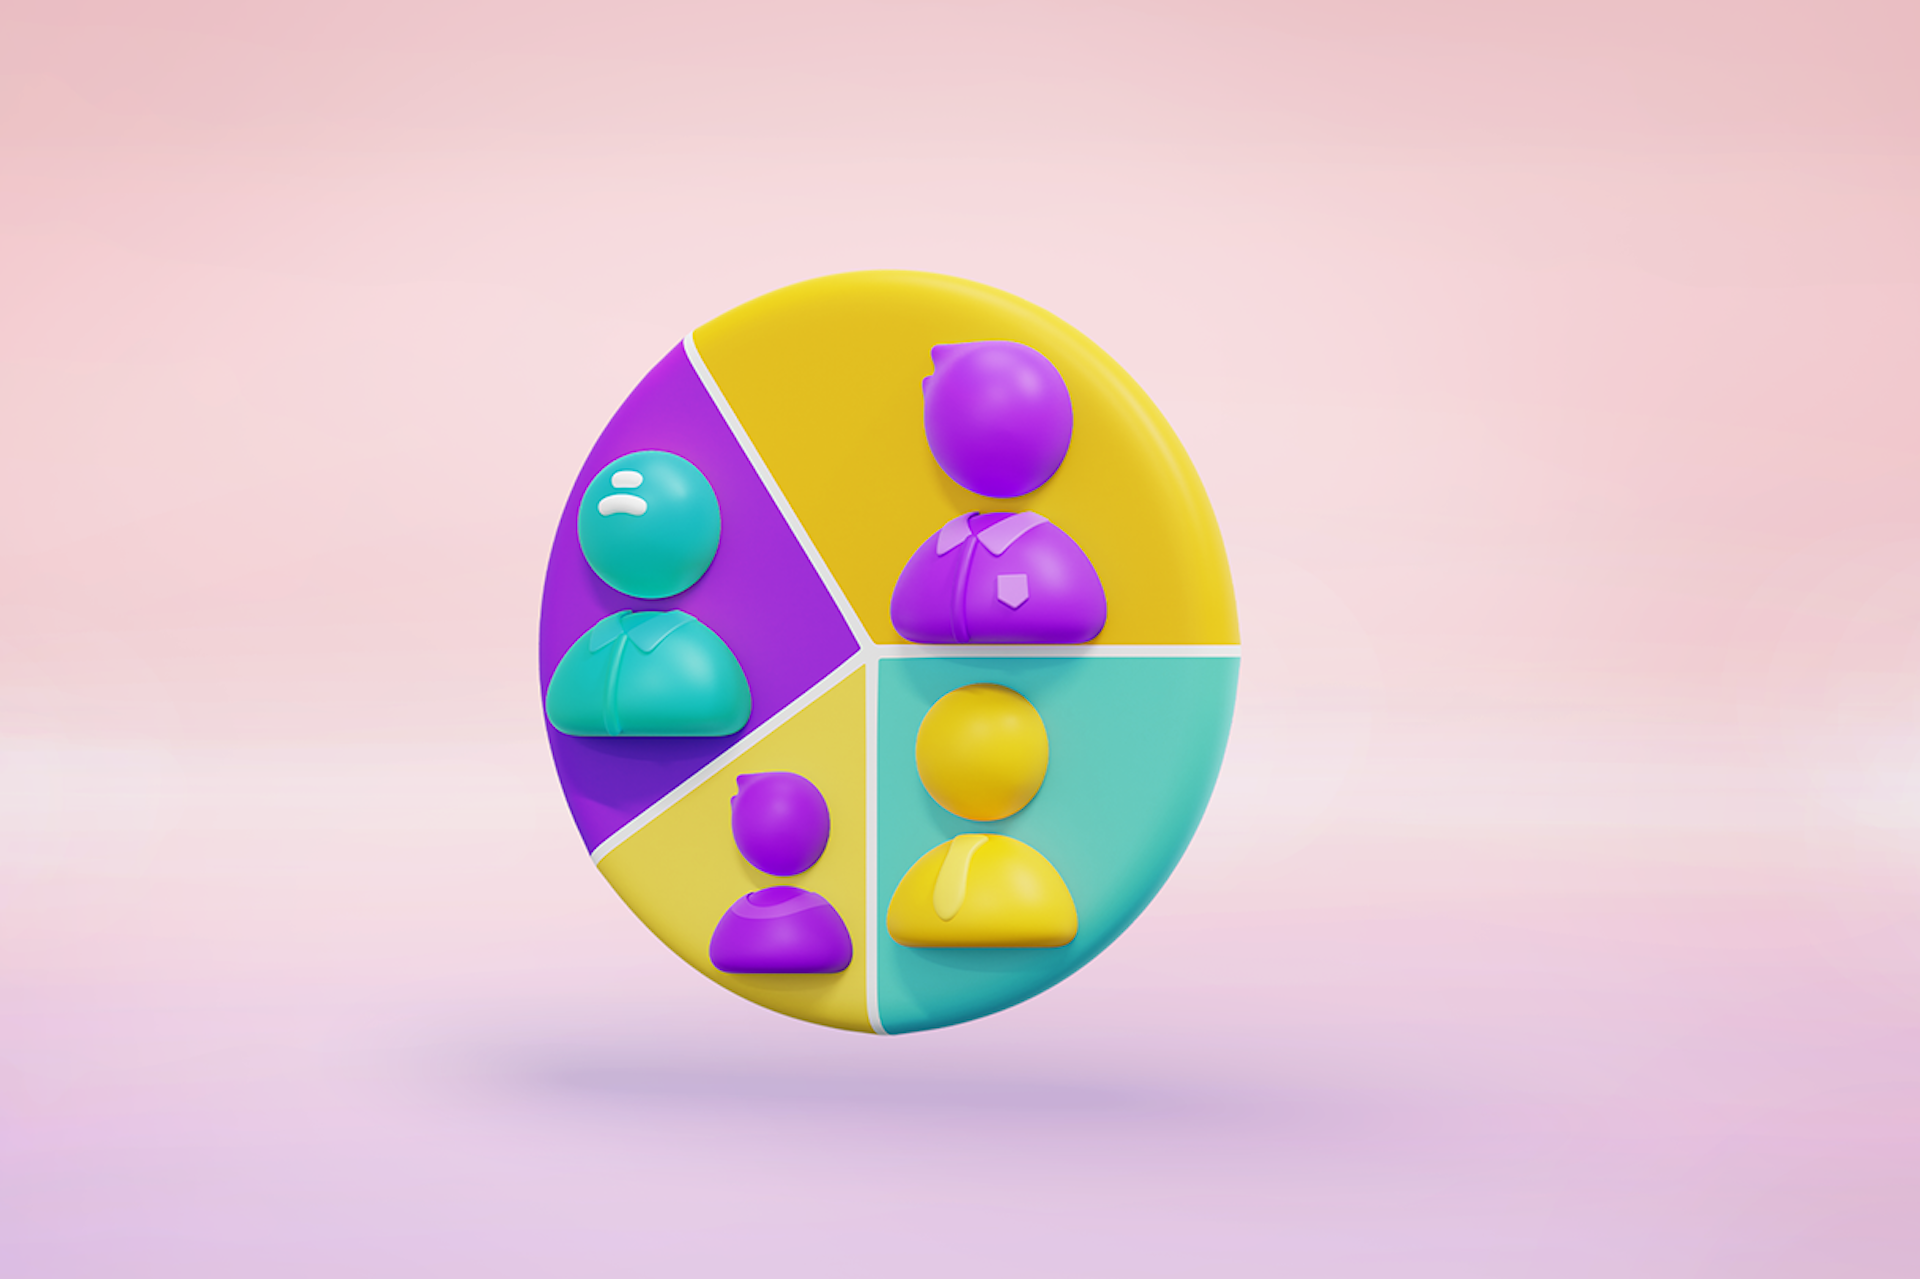 A 3D illustration of a pie chart representing customer segmentation